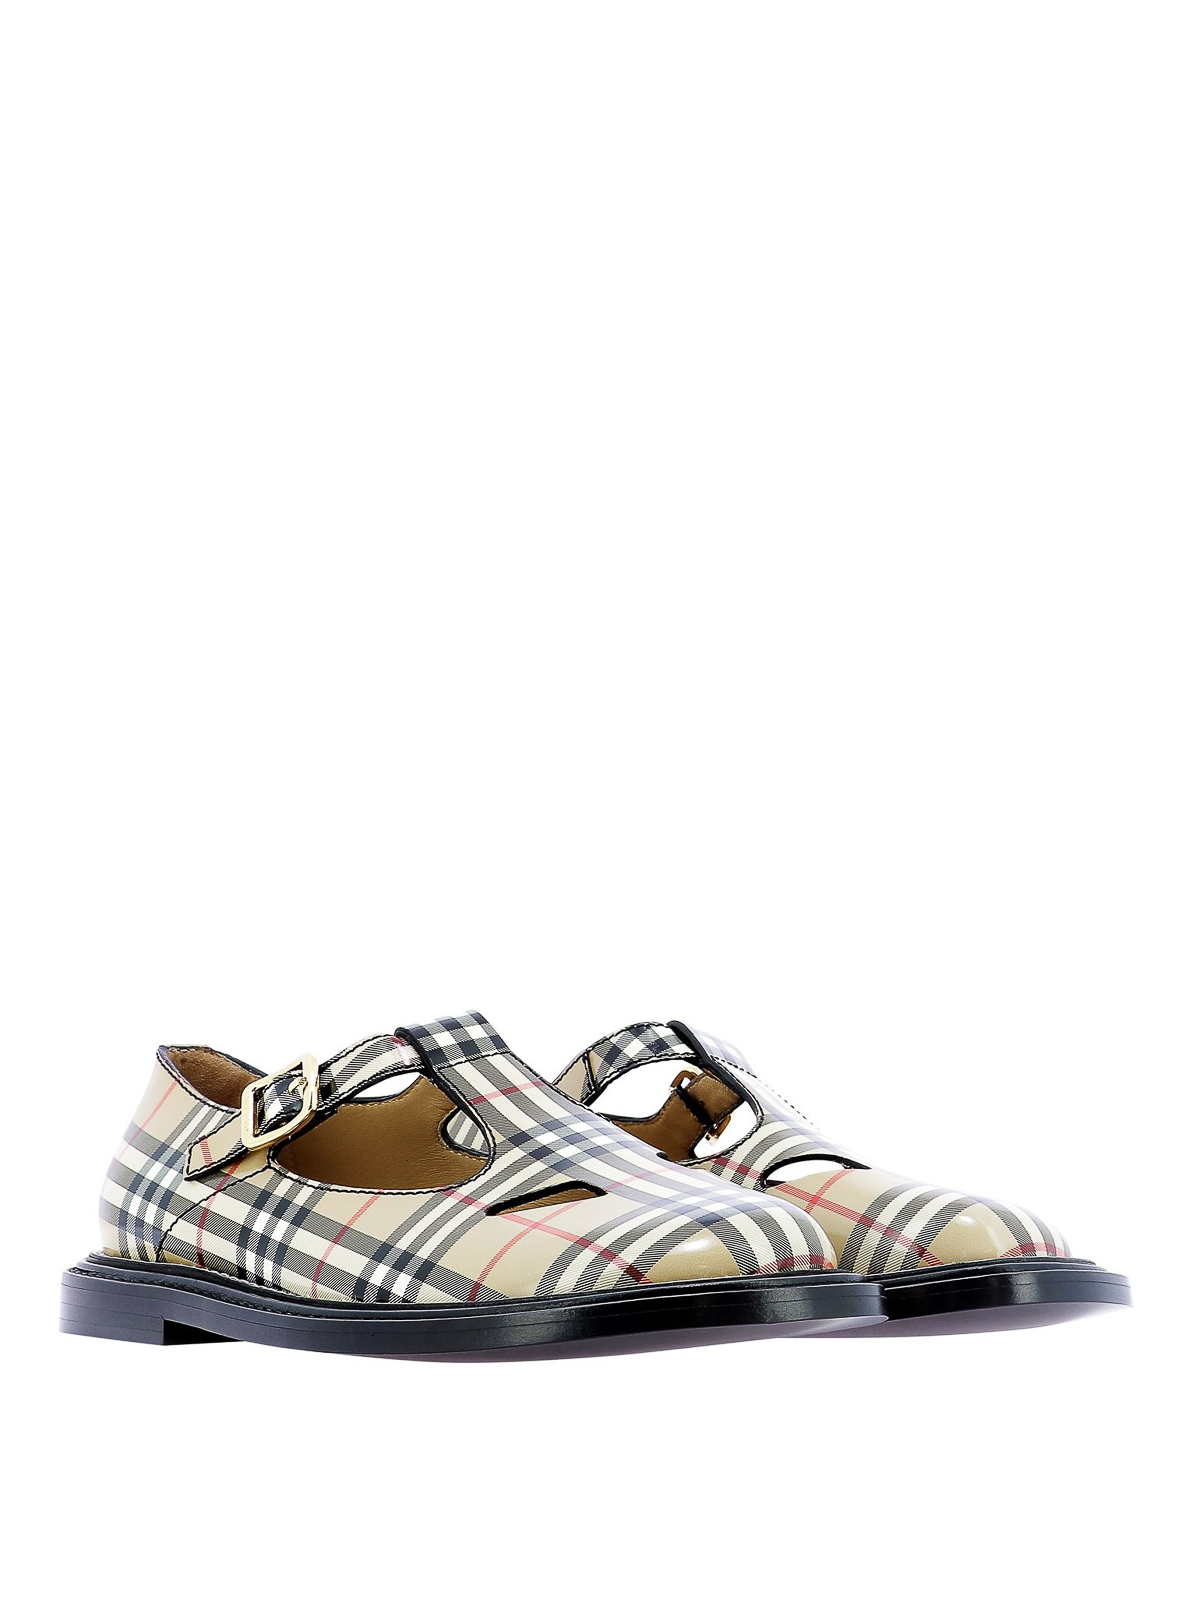 Sandals Burberry - Vintage Check leather T-bar sandals - 8010911